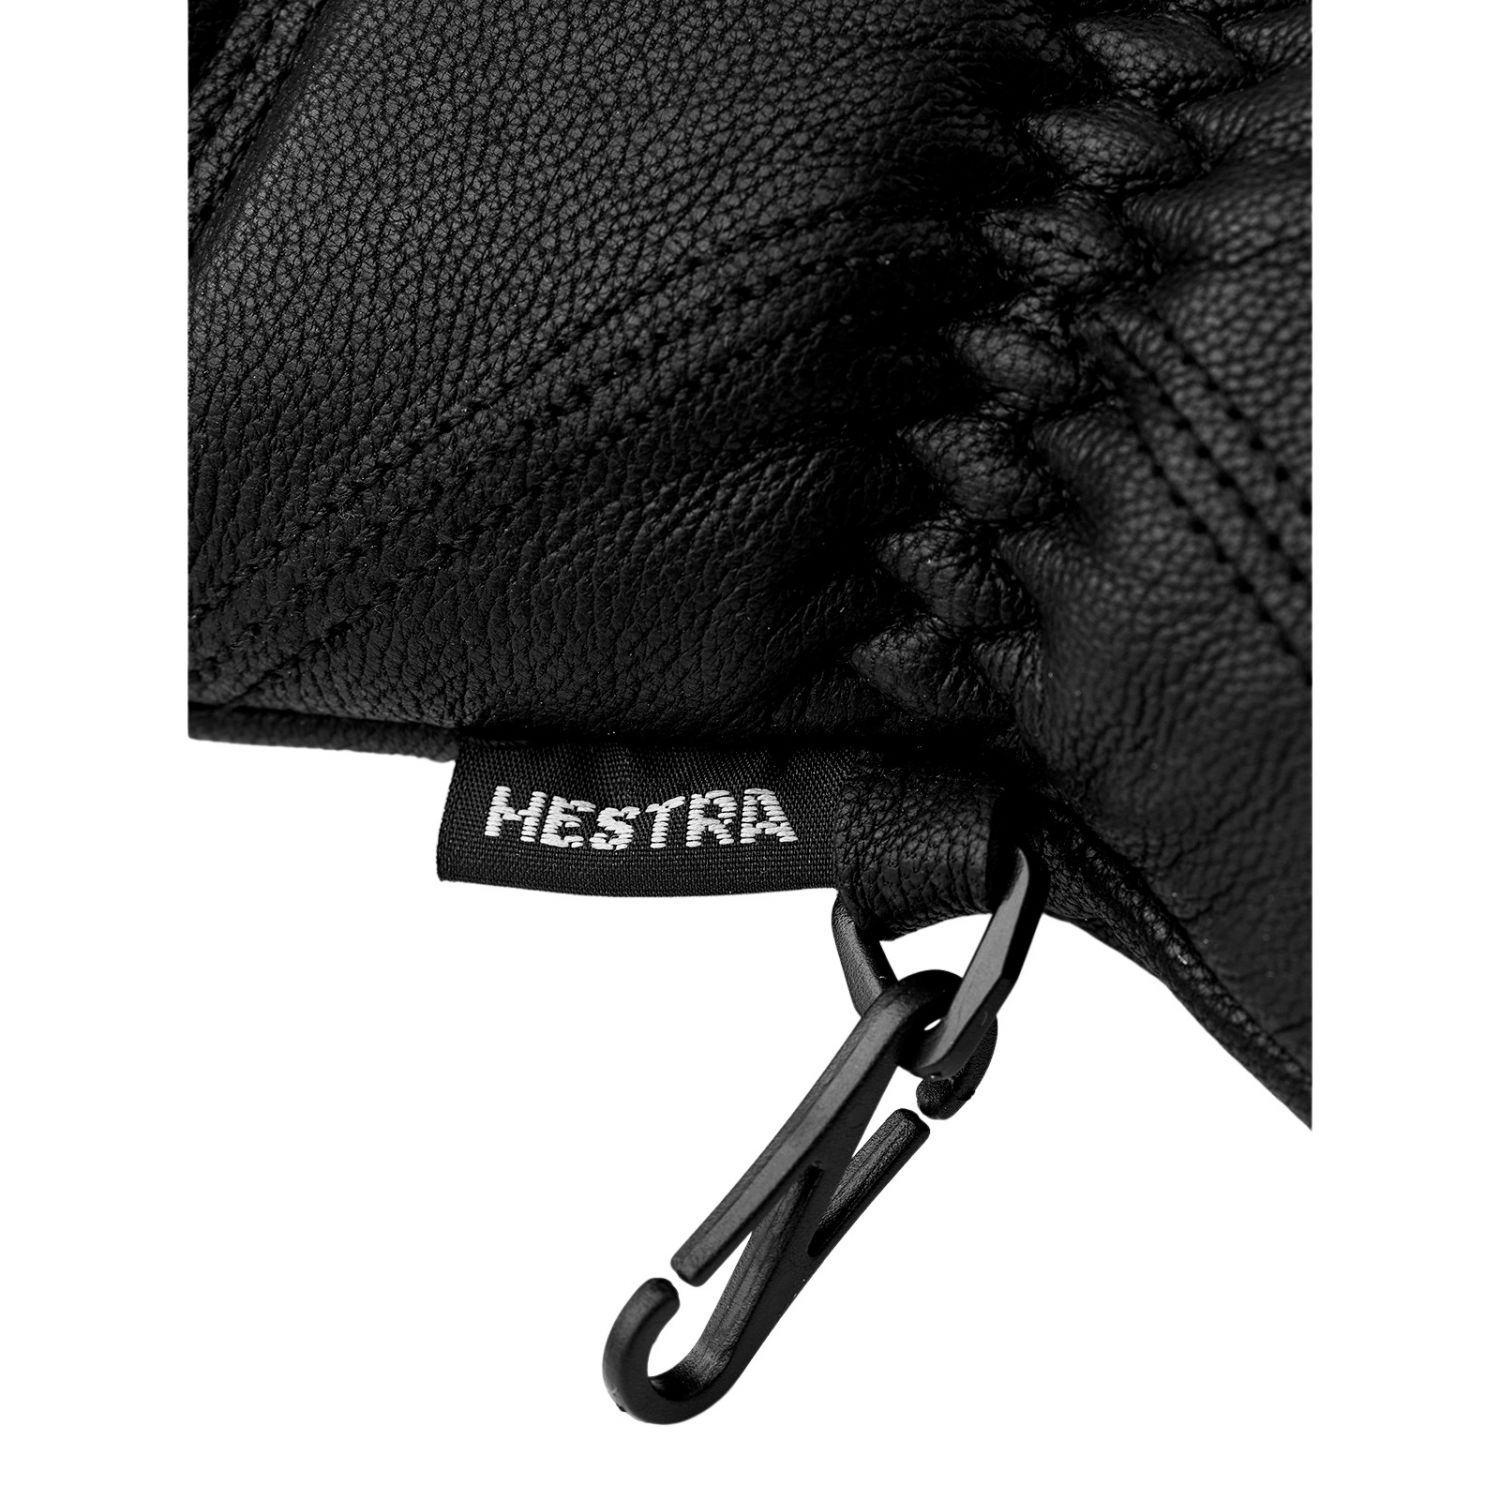 Hestra Leather Box, mitaine, noir